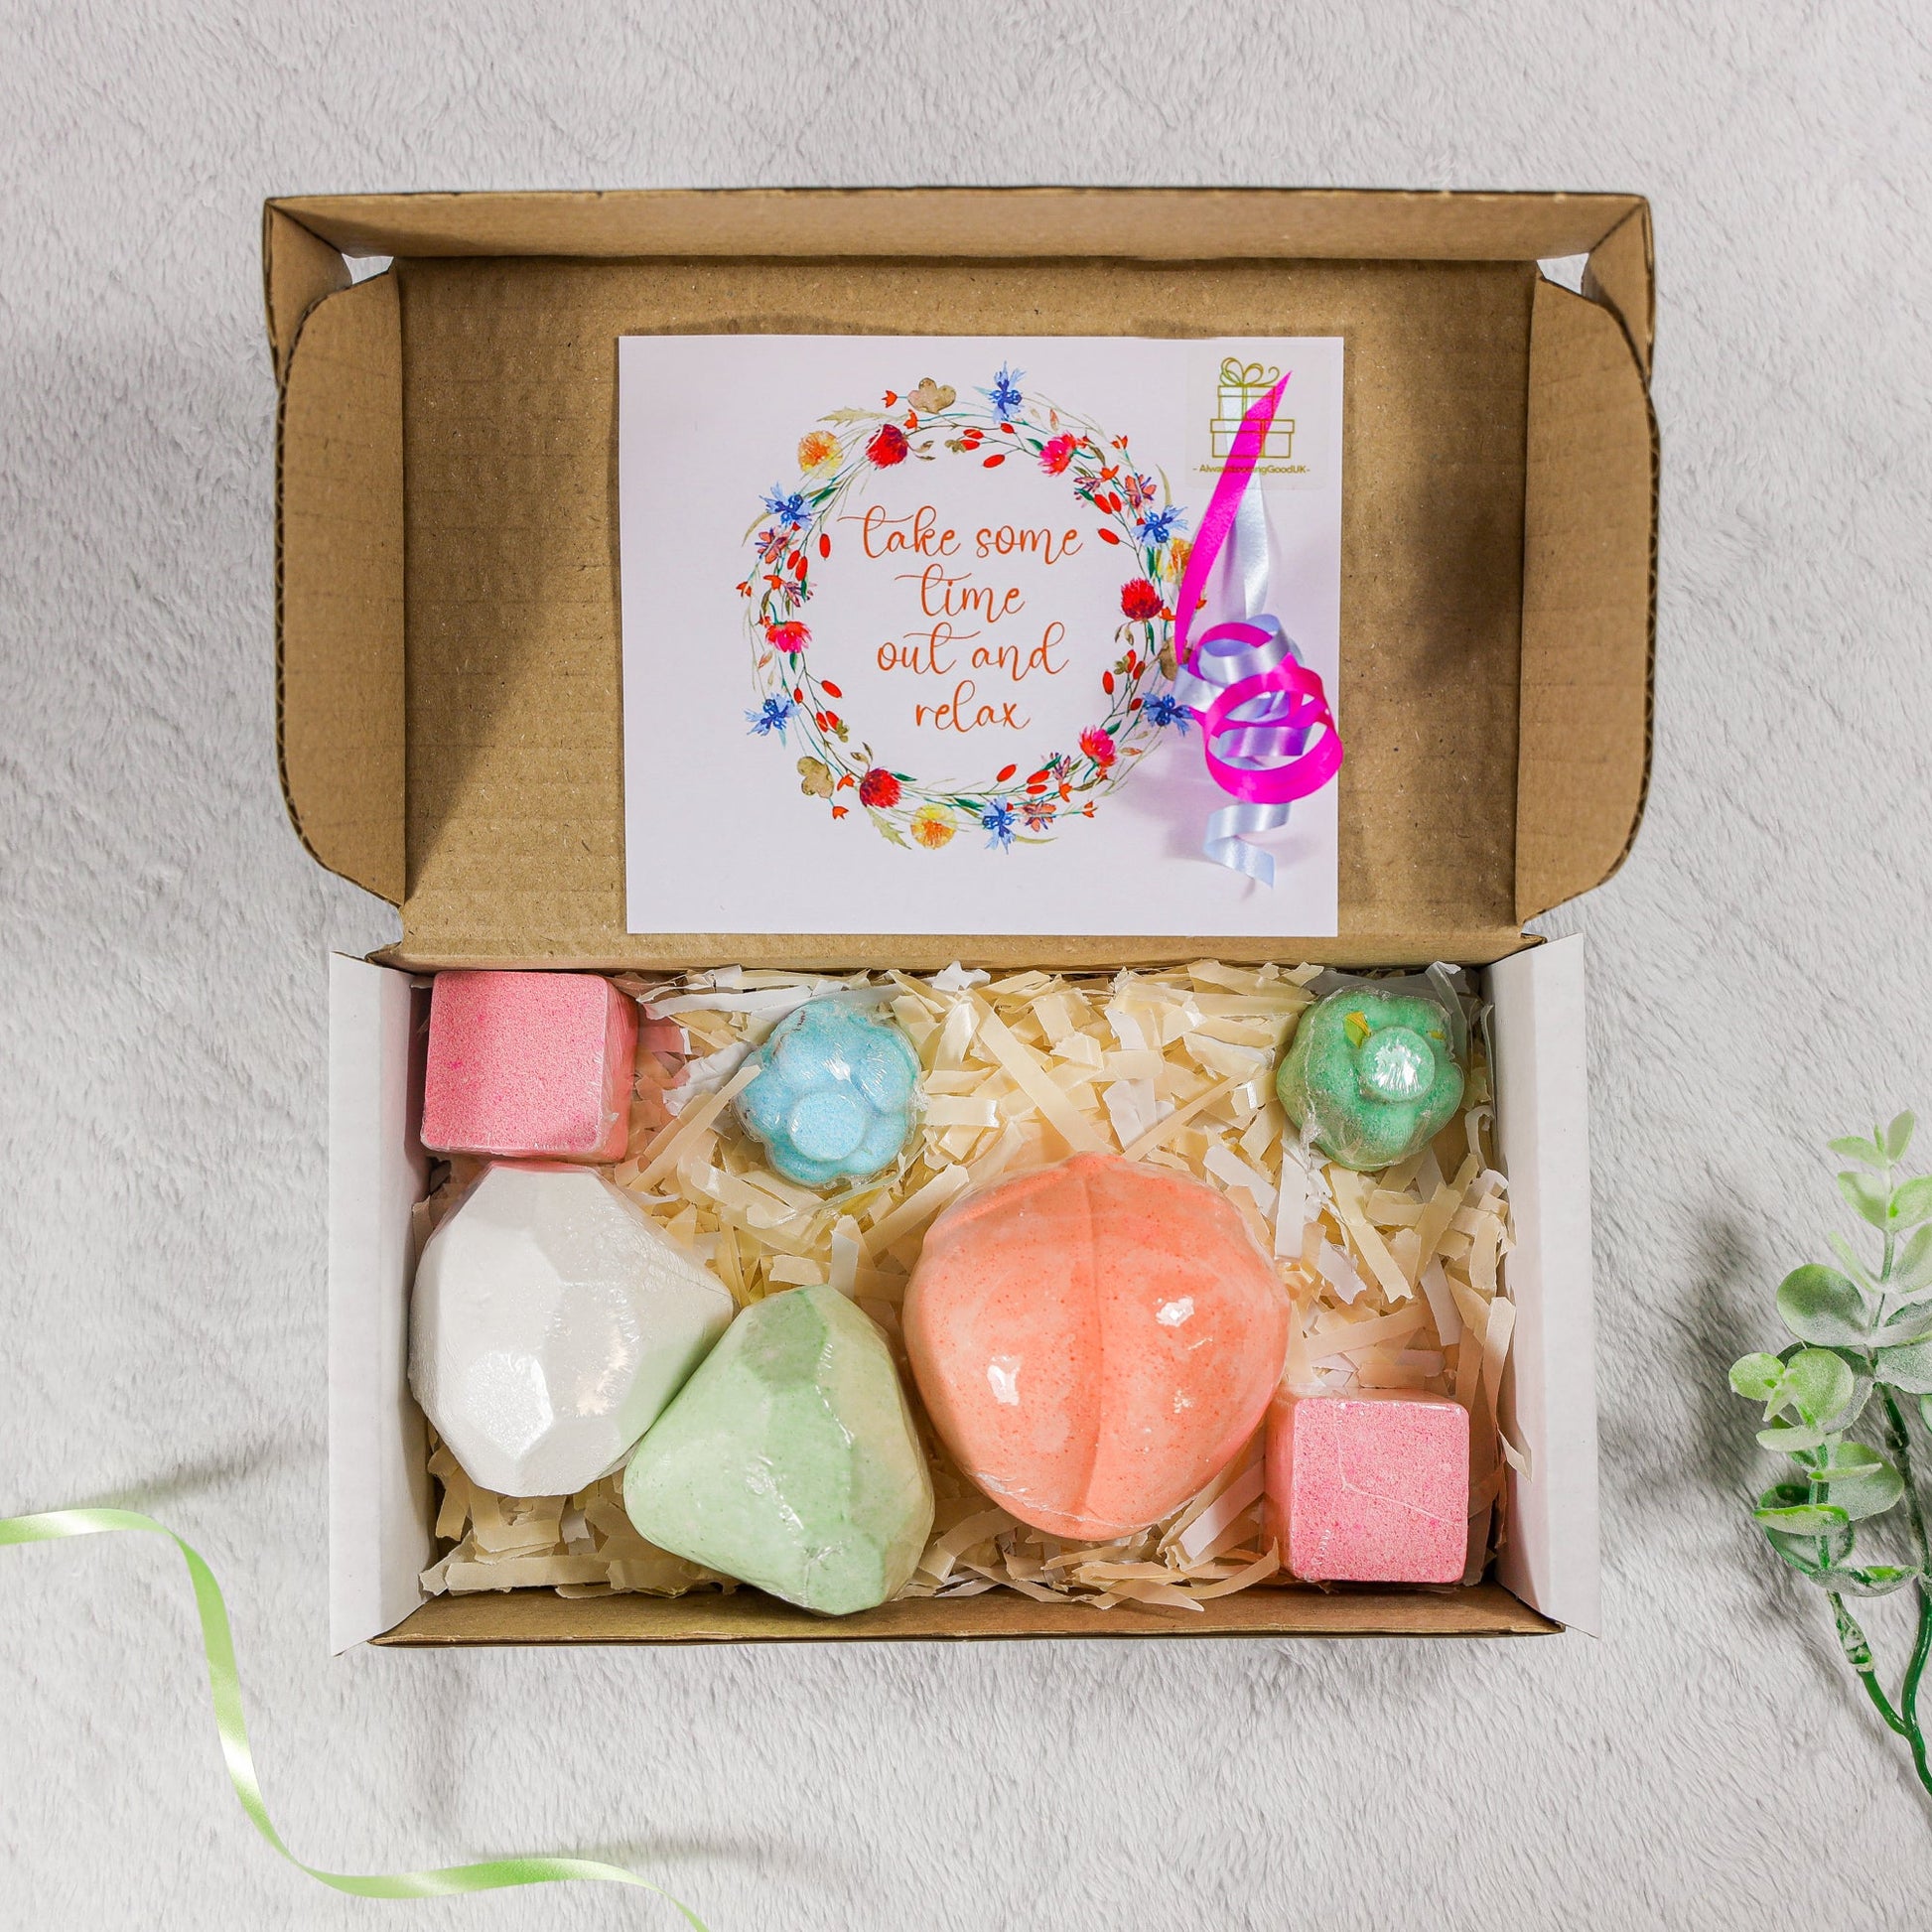 Mother's Day Bath Bomb & Bath Fizzer Gift Box  - Always Looking Good -   